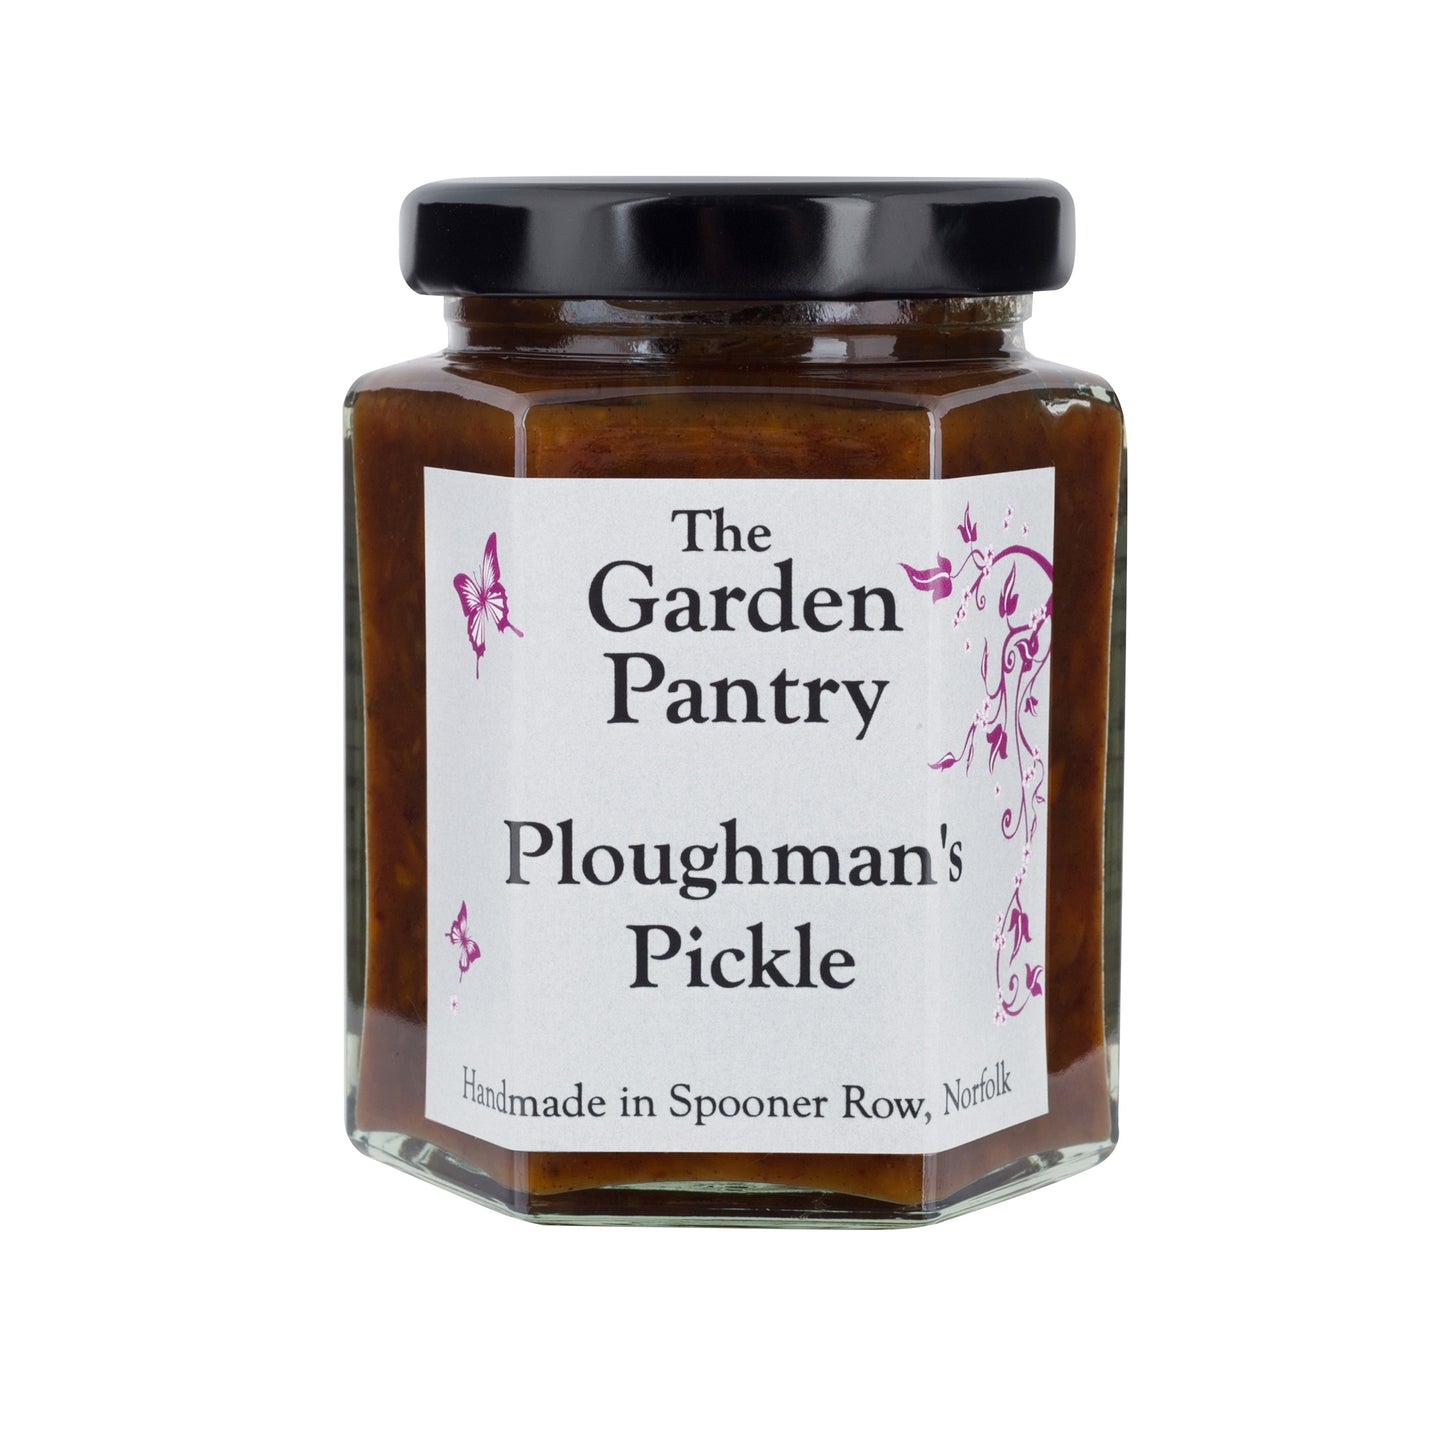 The Garden Pantry Ploughman's Pickle